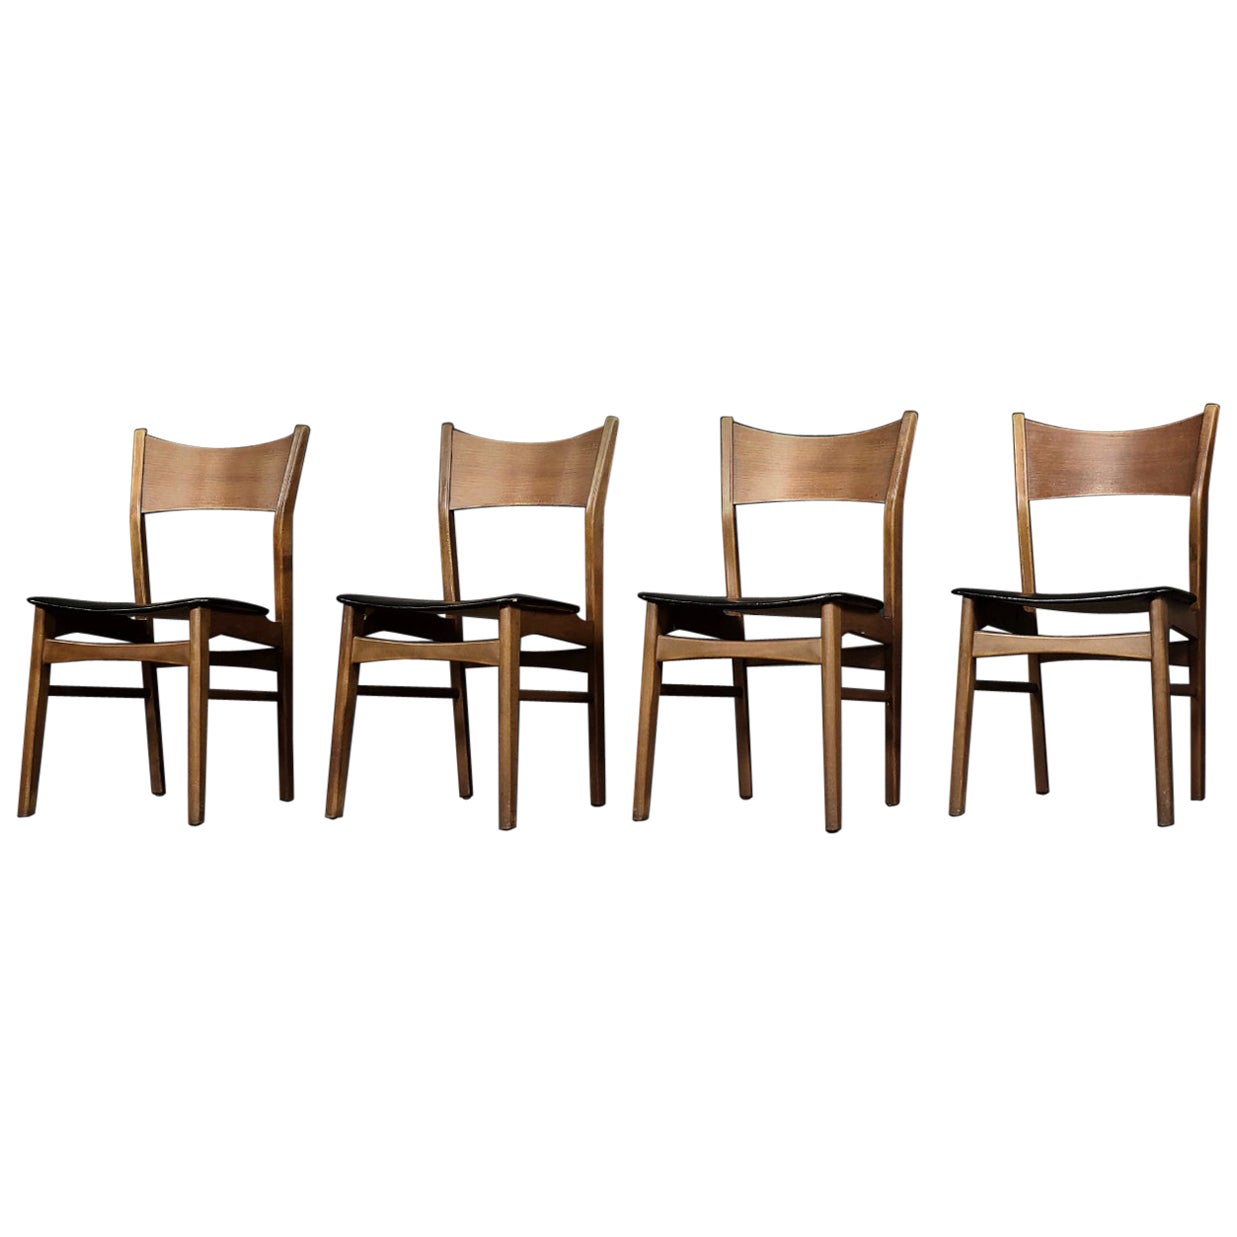 Set of 4 Vintage Mid-Century Modern Scandinavian Dining Chairs in Beech &Teak 